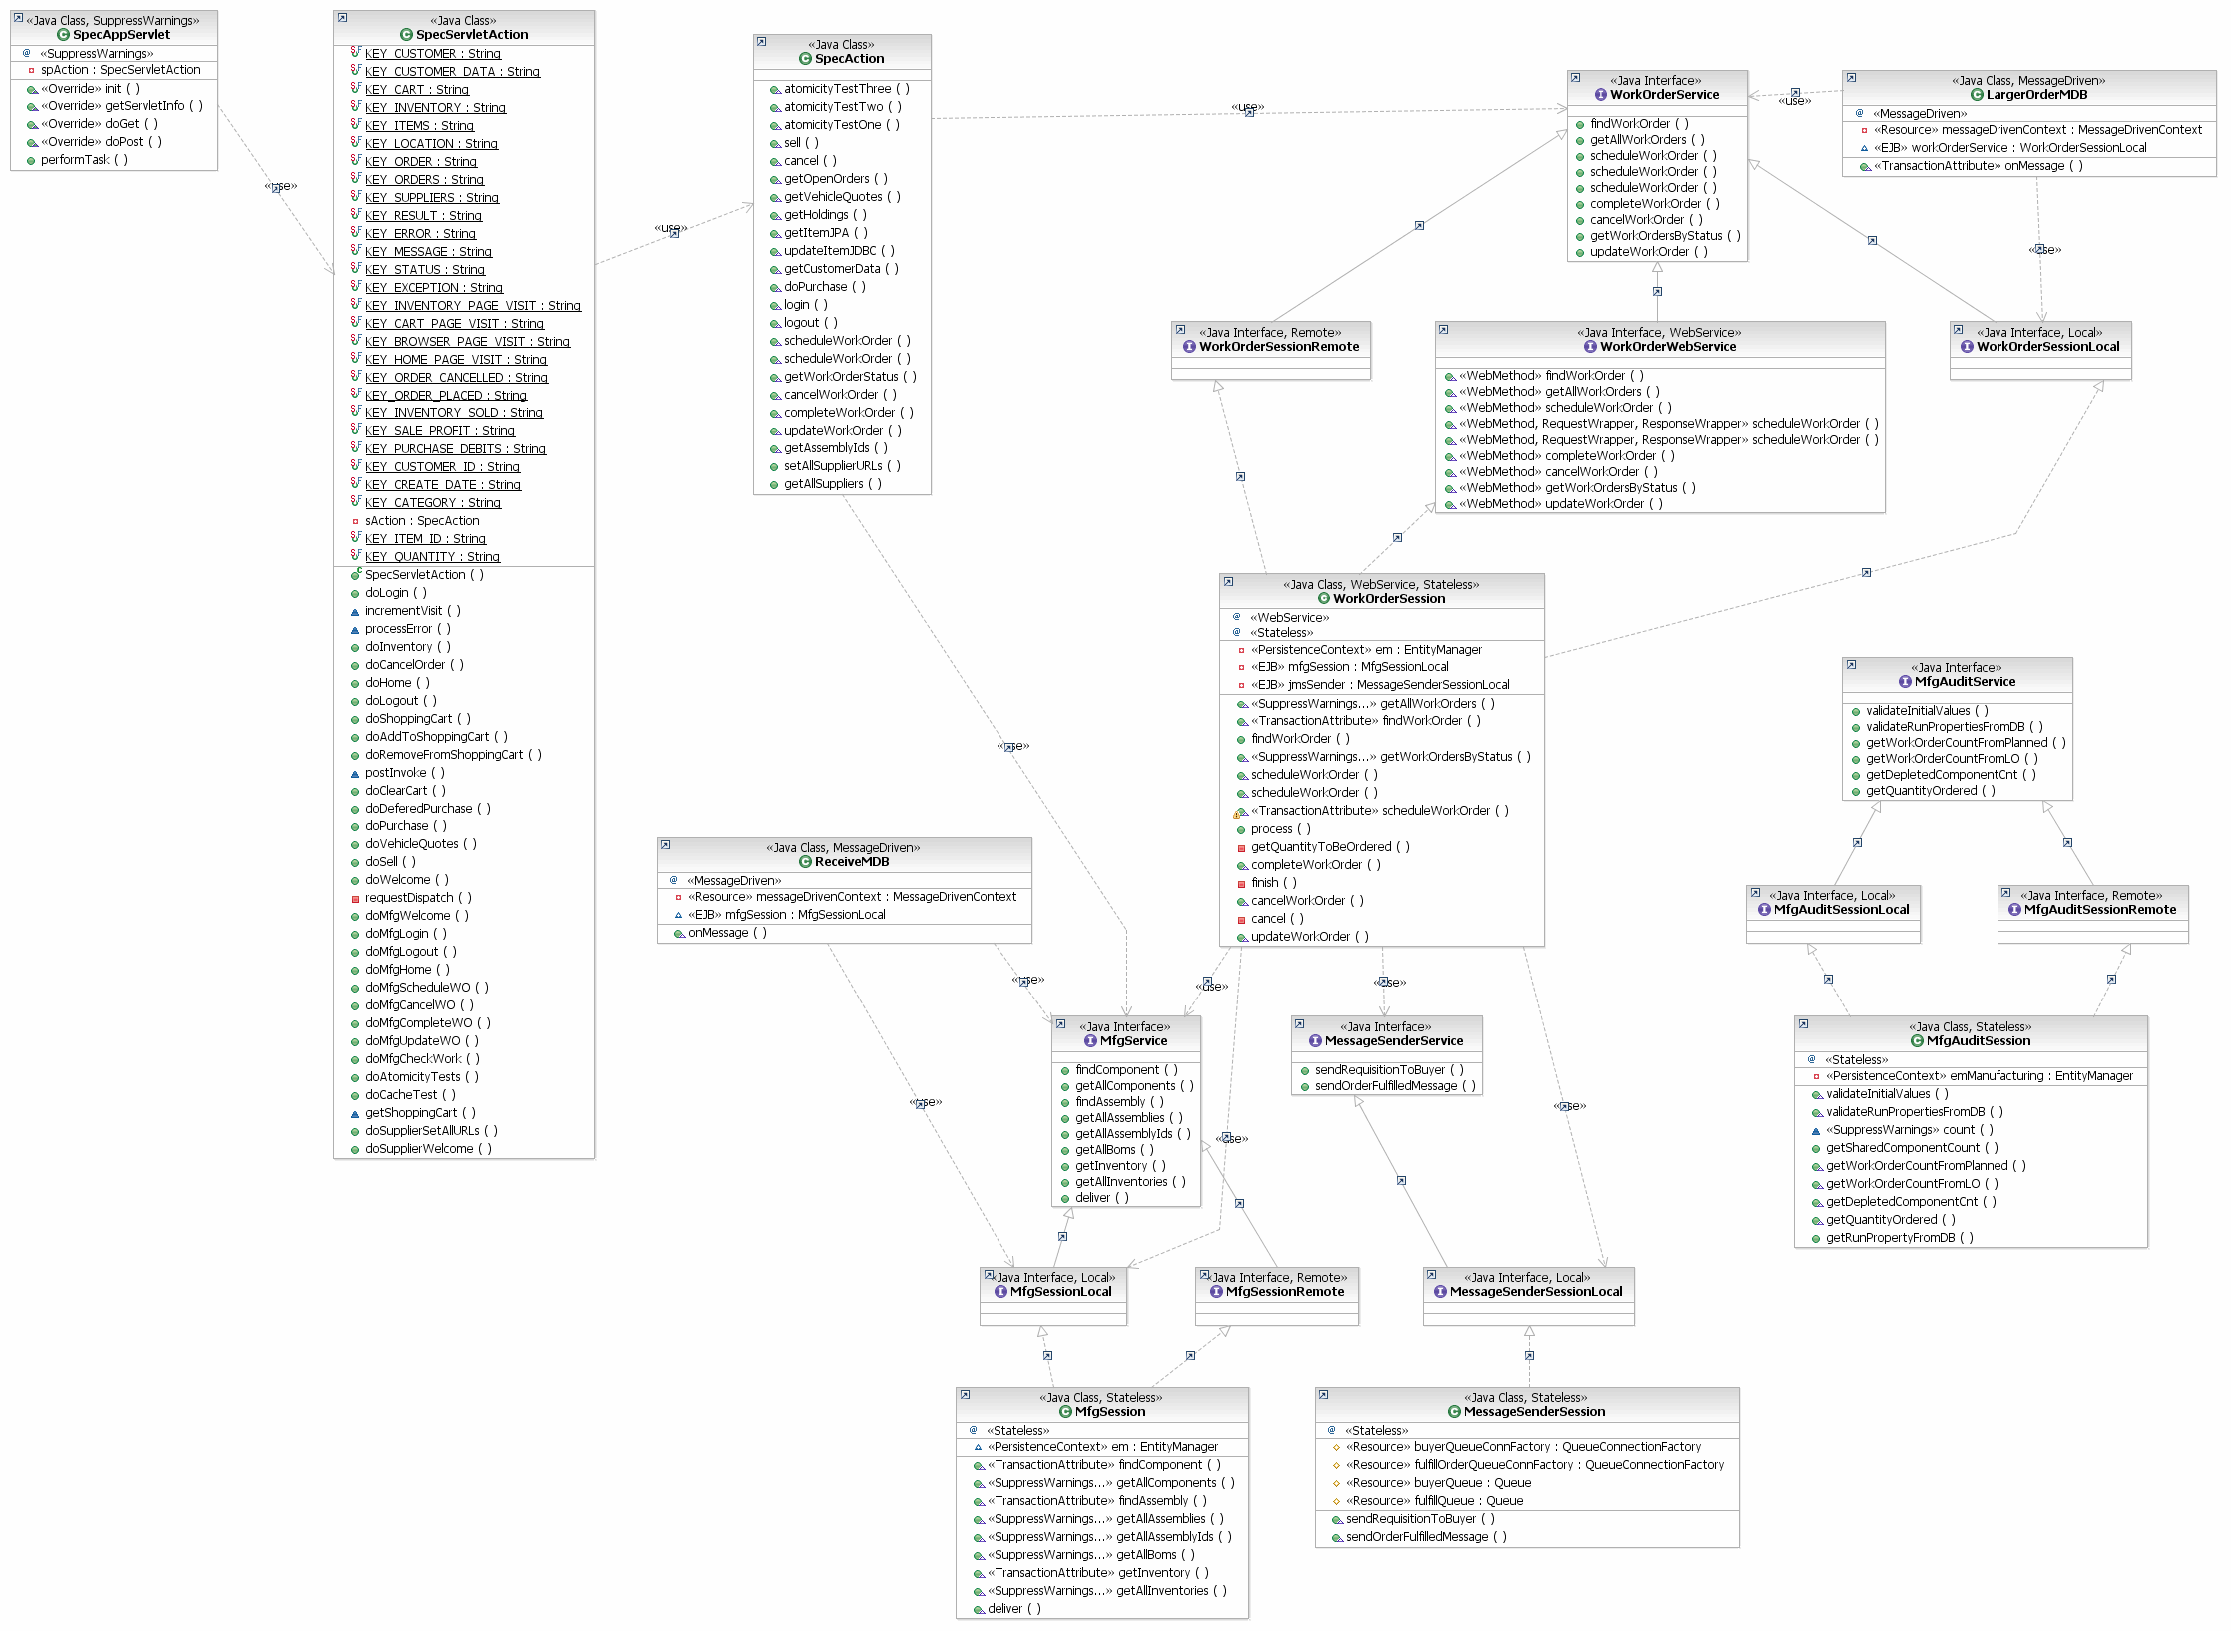 UML diagram for the Manufacturing Domain